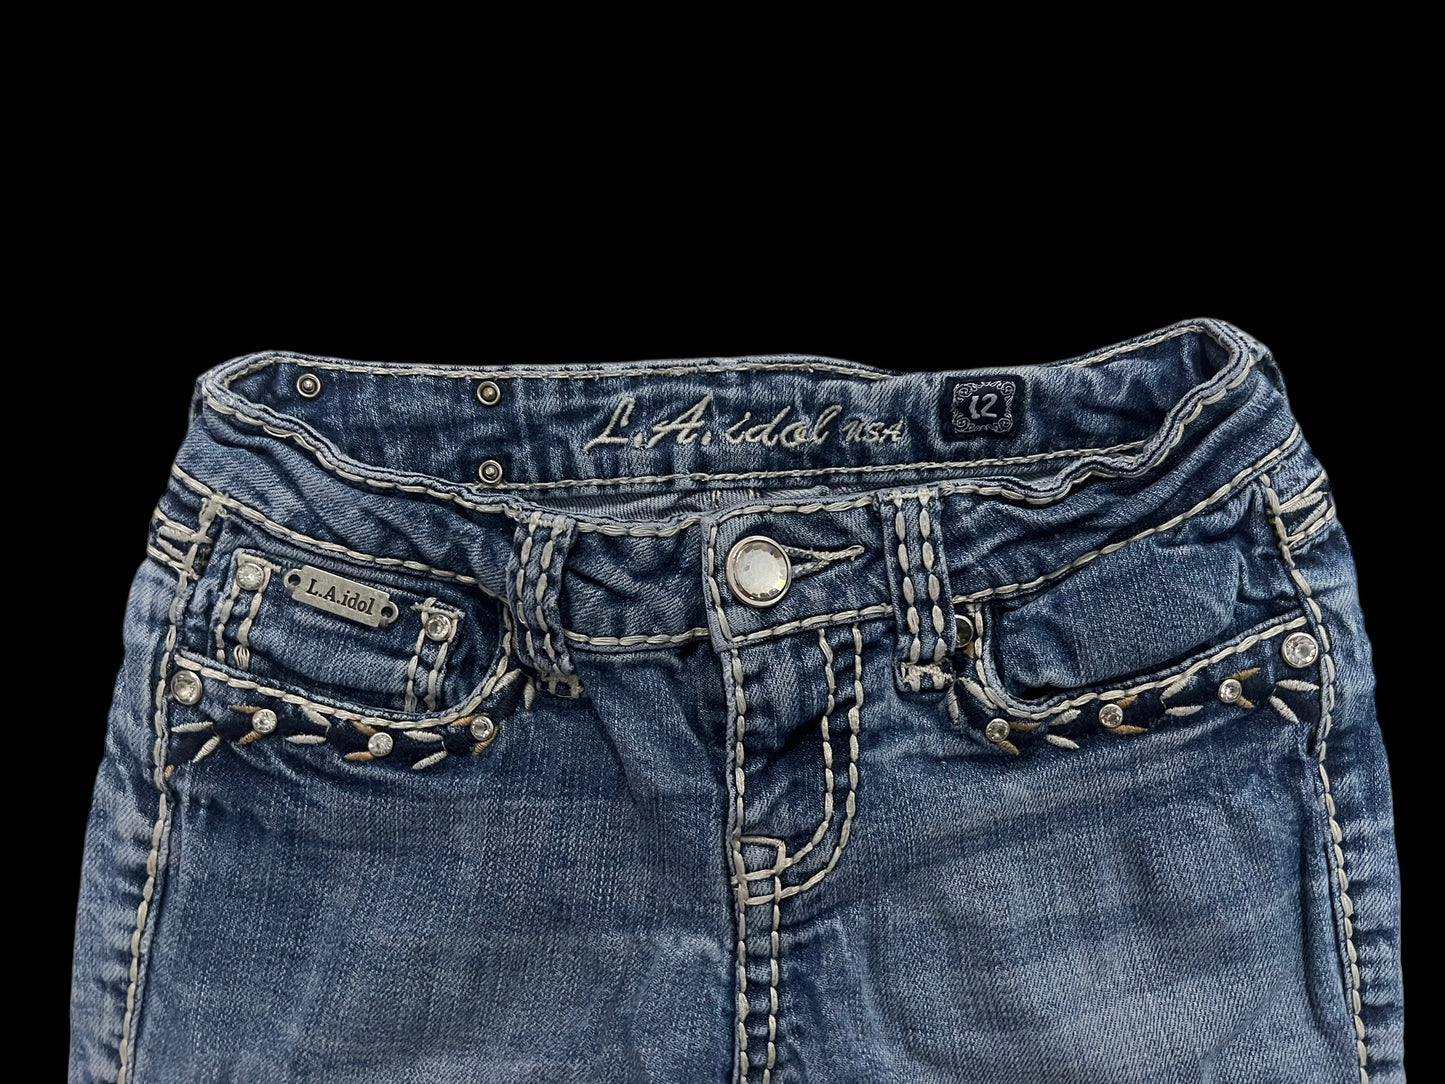 L.A. Idol embellished jeans